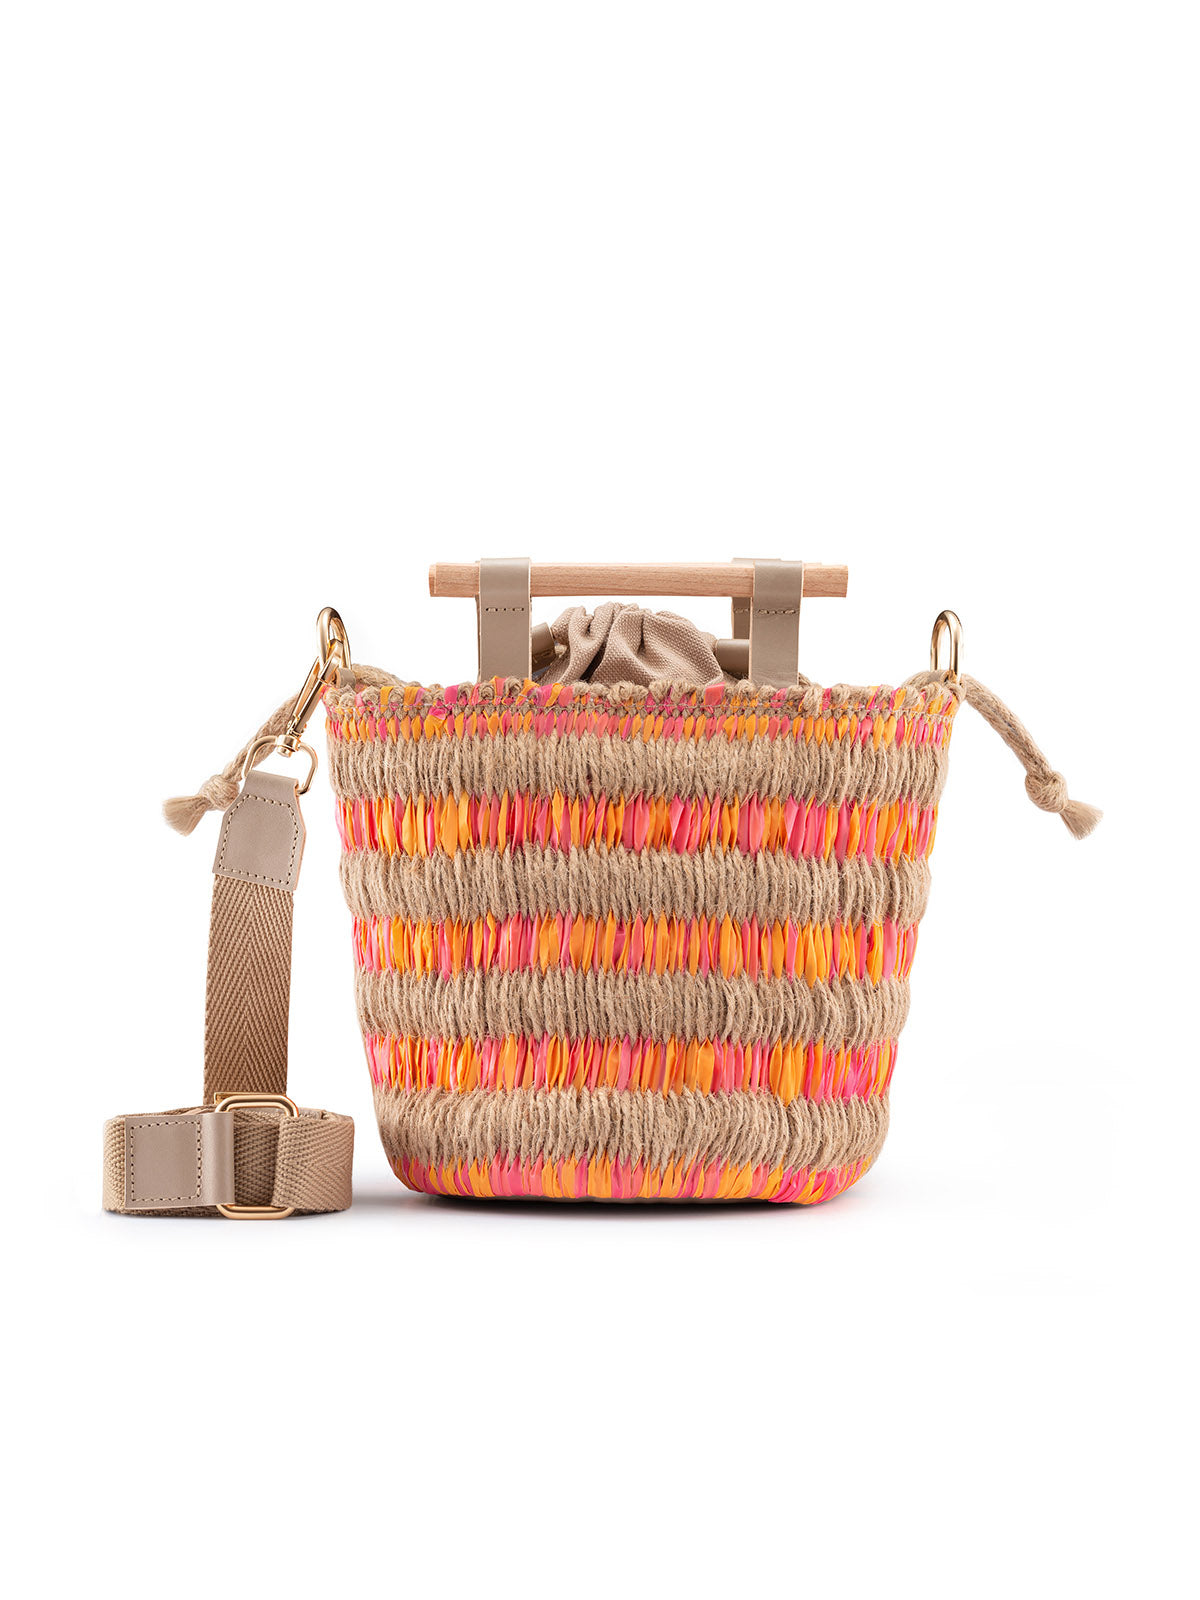 Mini Afro Basket in Pink and Orange